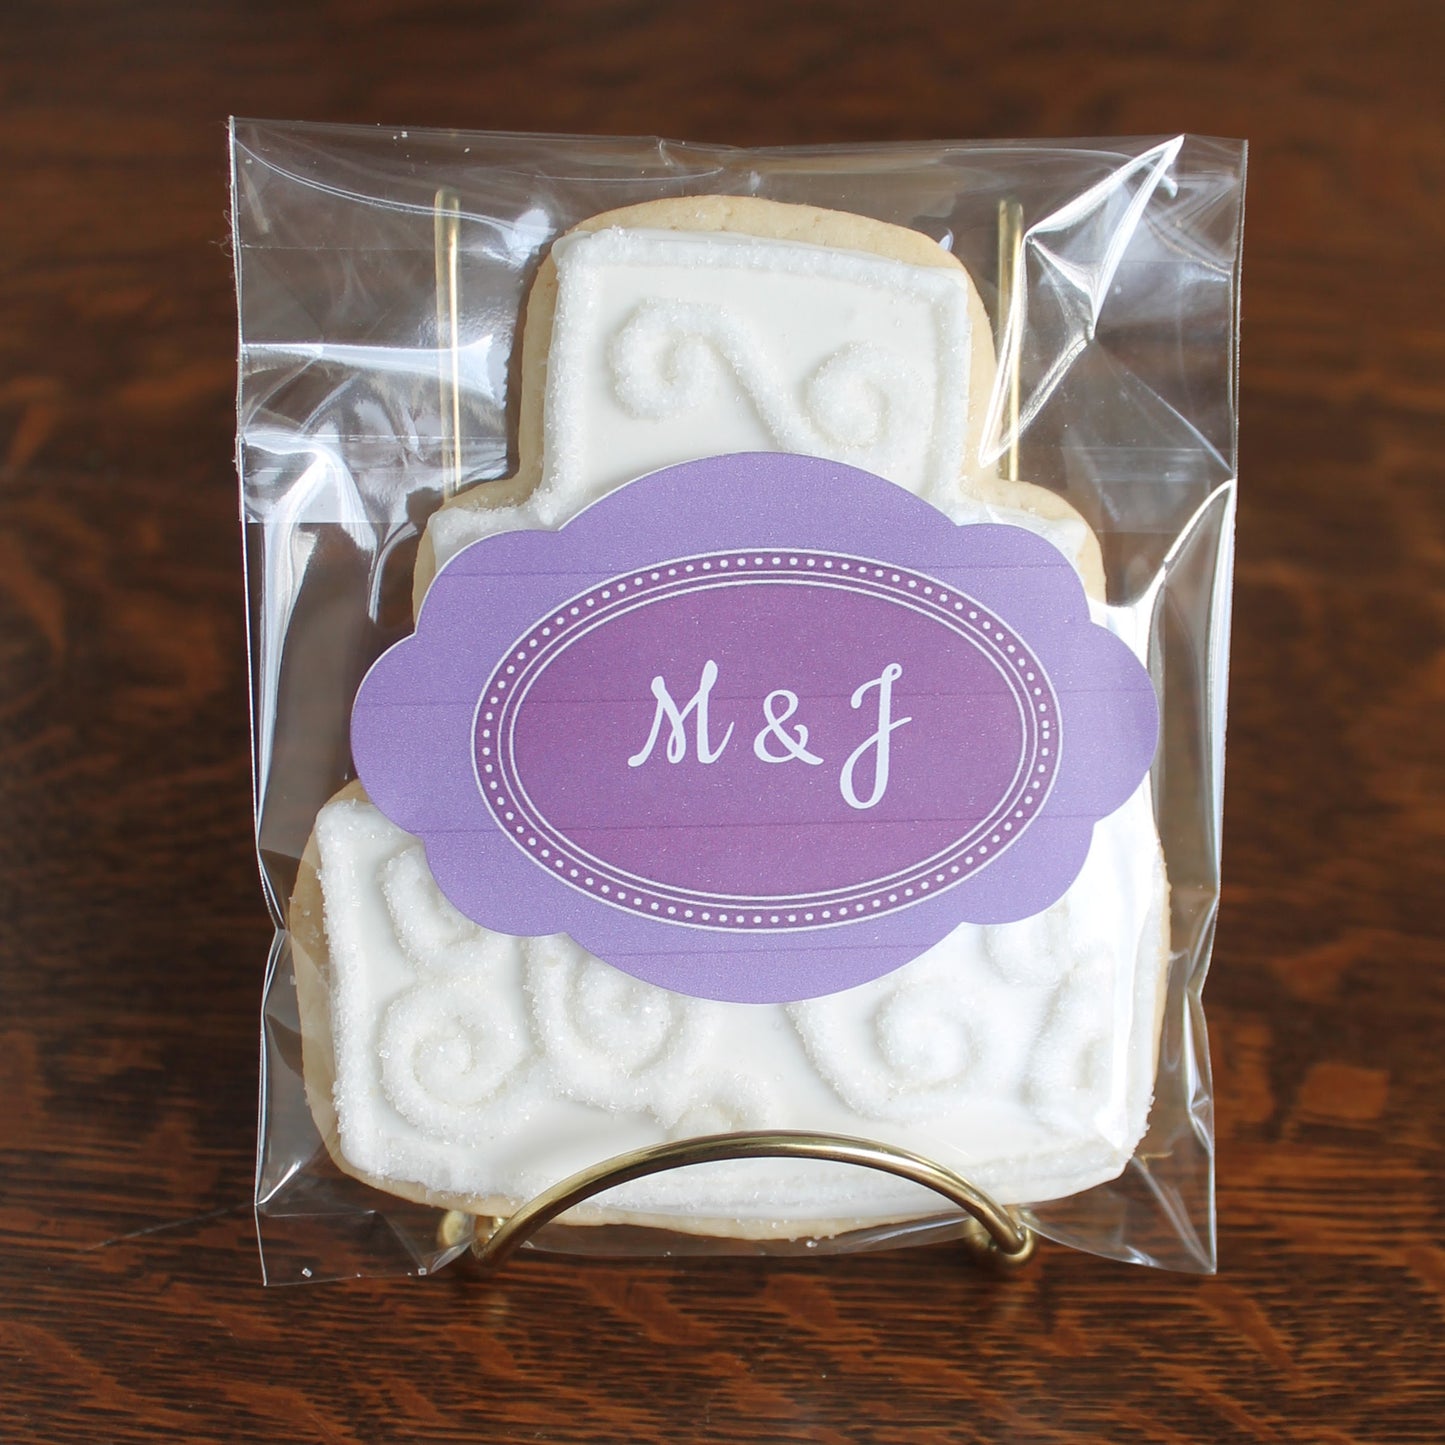 Wedding Cake Cookie - M&J